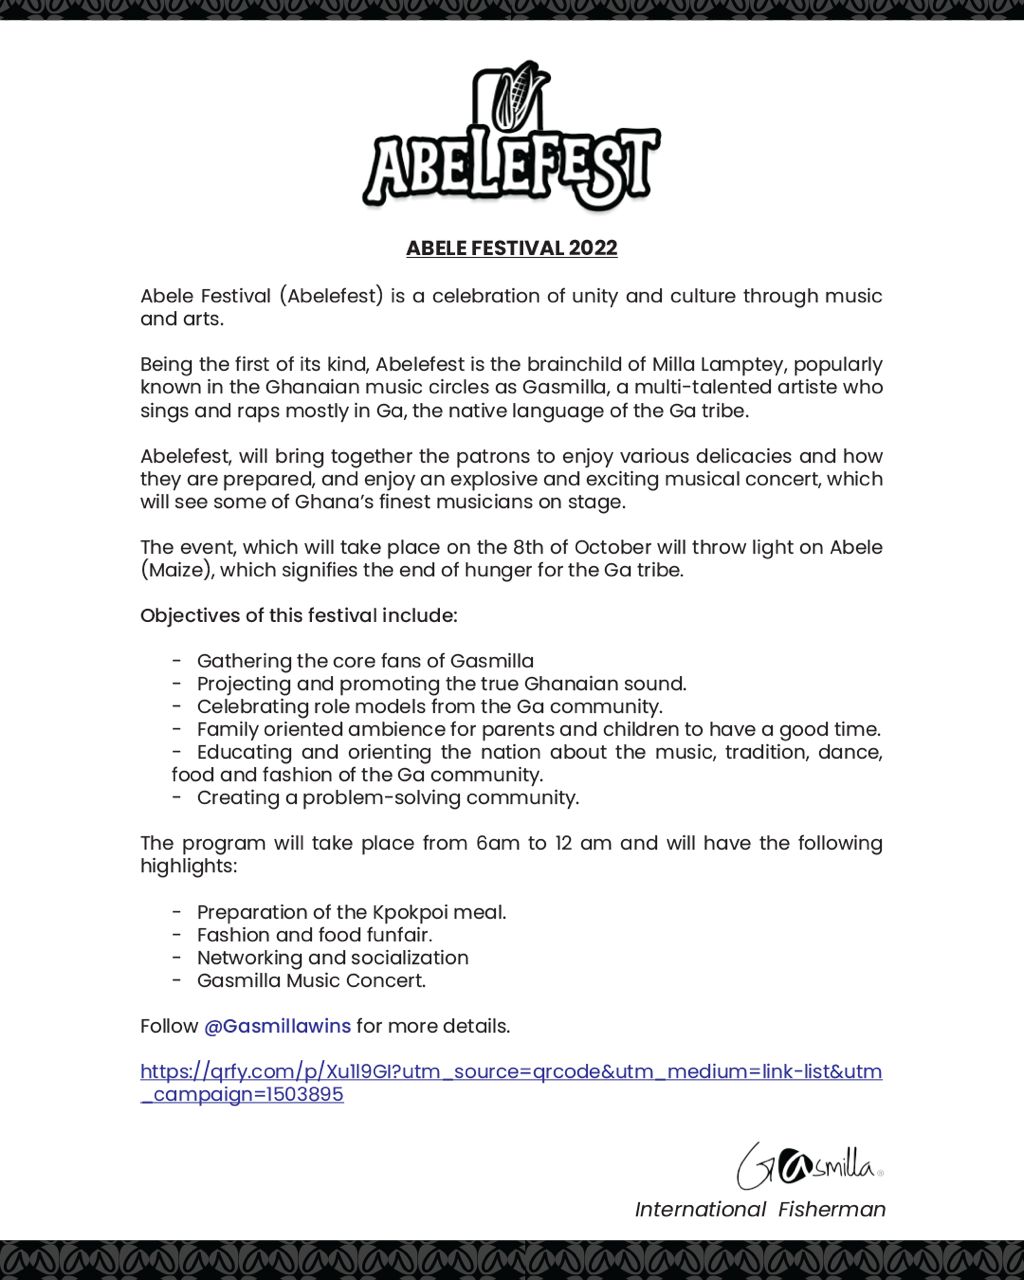 Gasmilla's 'AbeleFest' slated for October 8